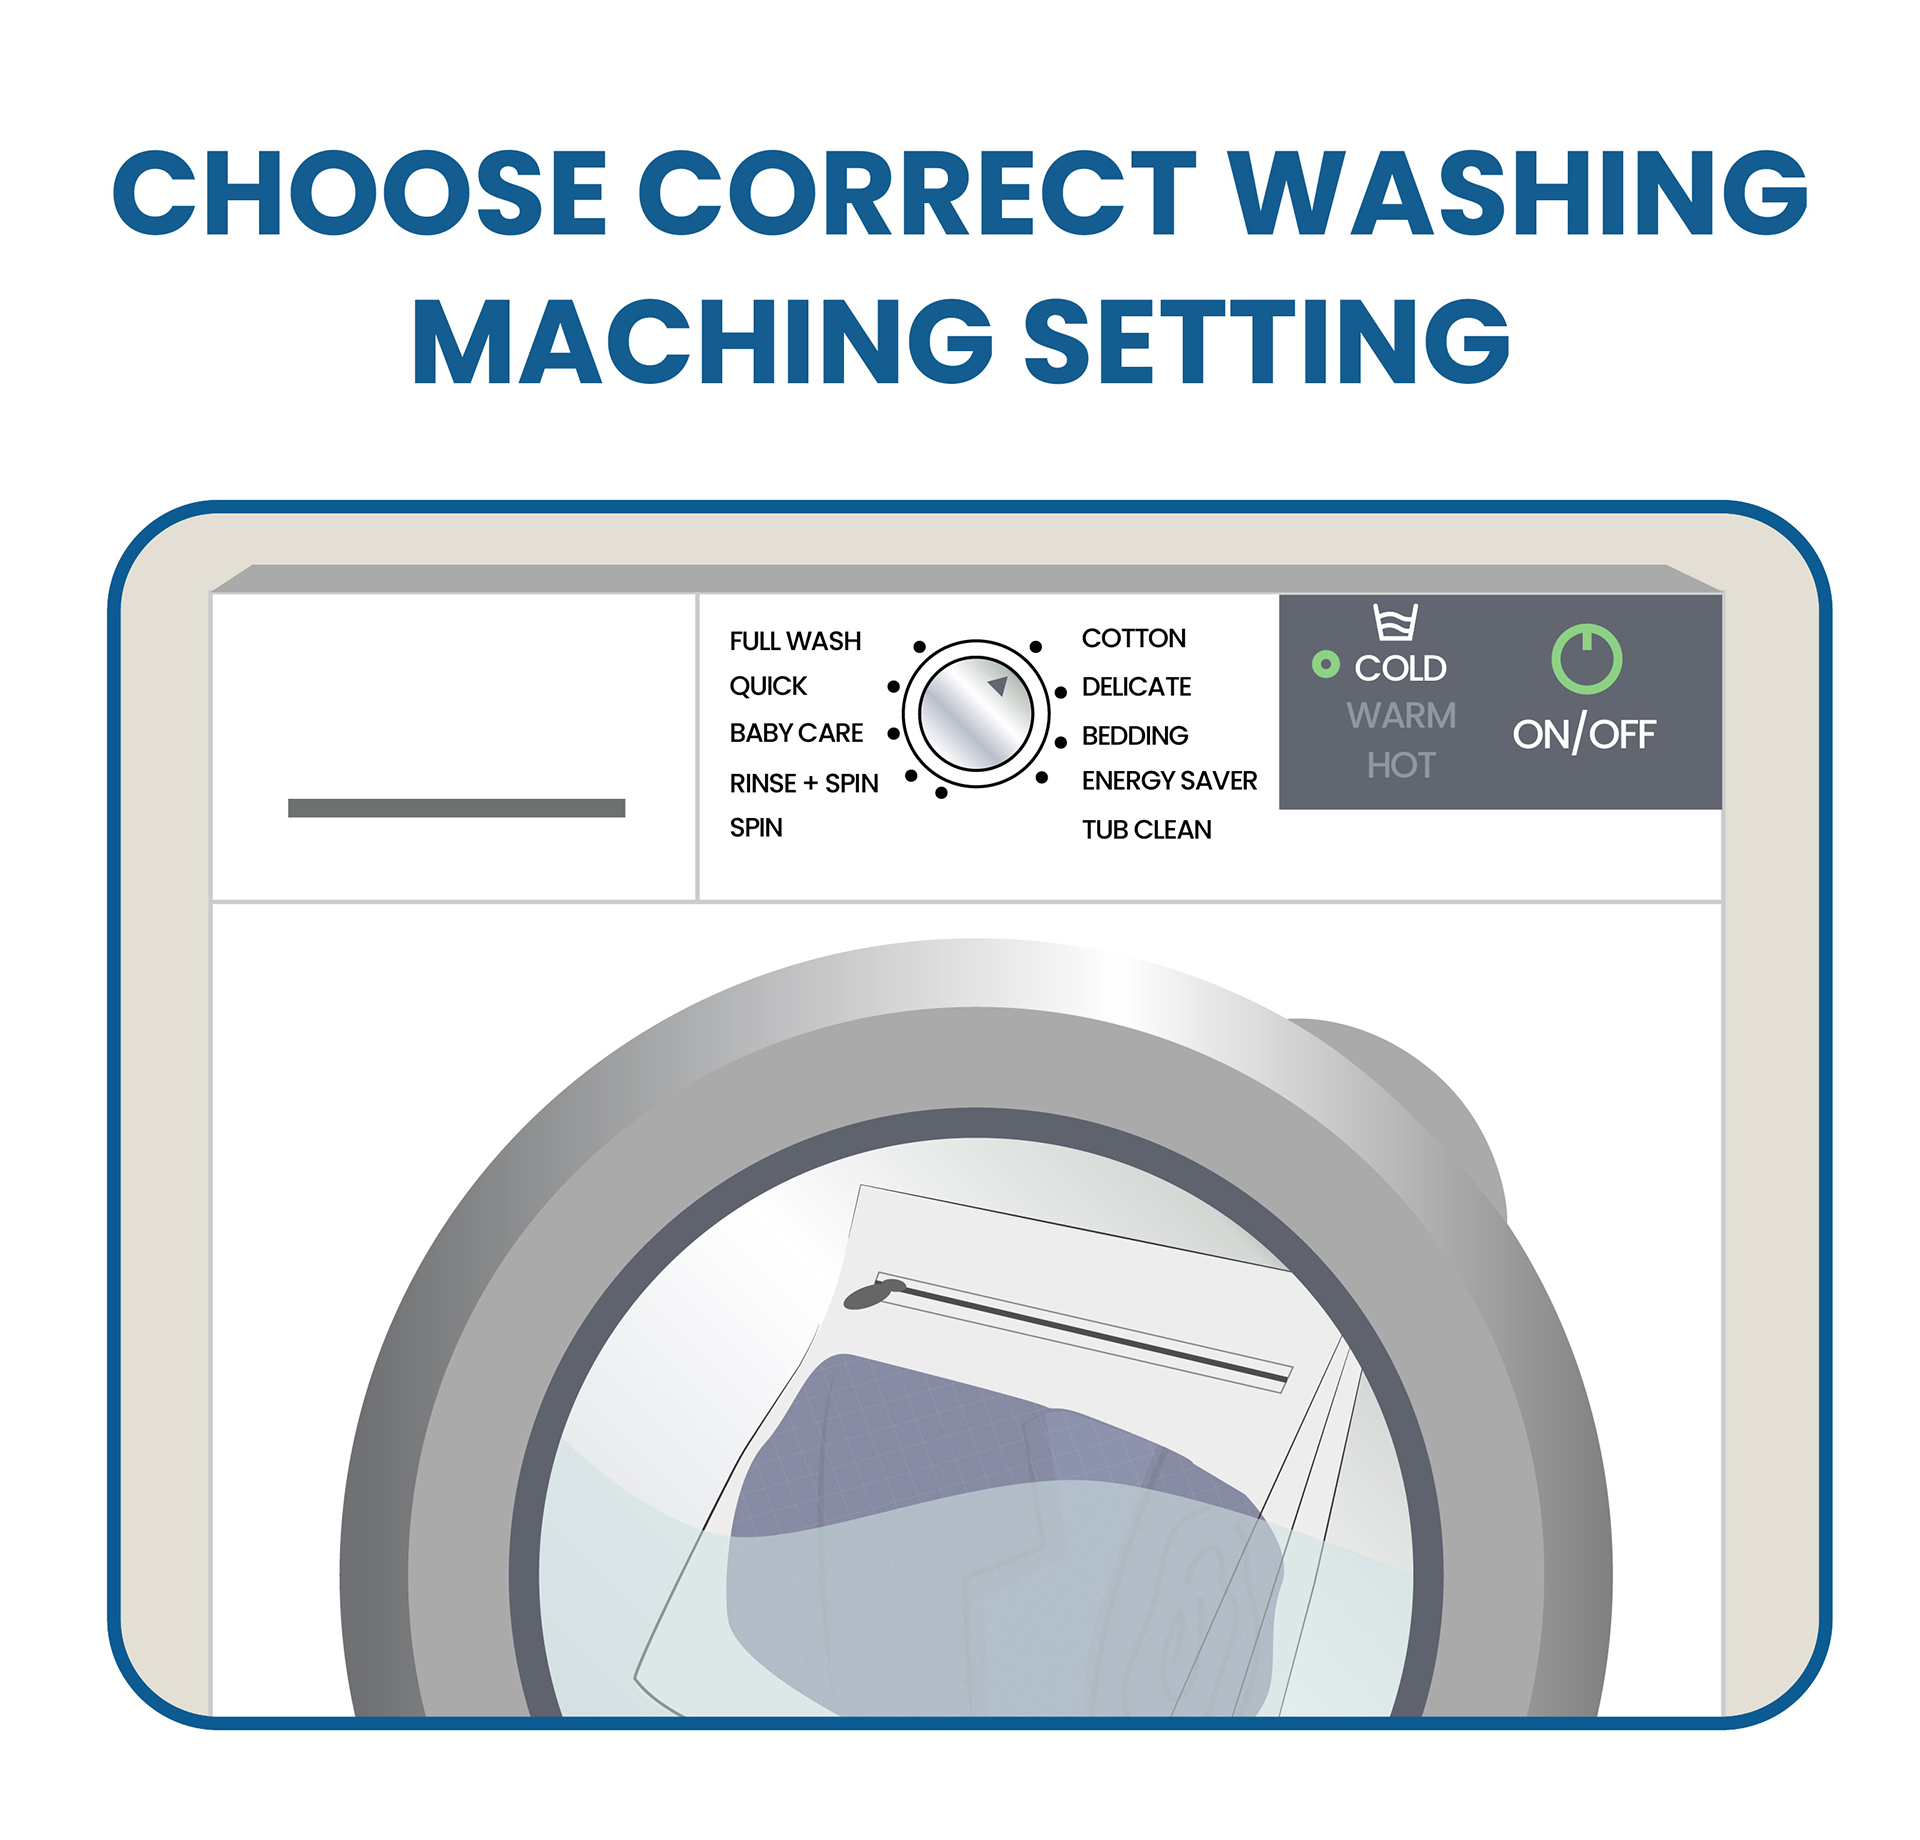 choose correct washing machine setting to wash your suit